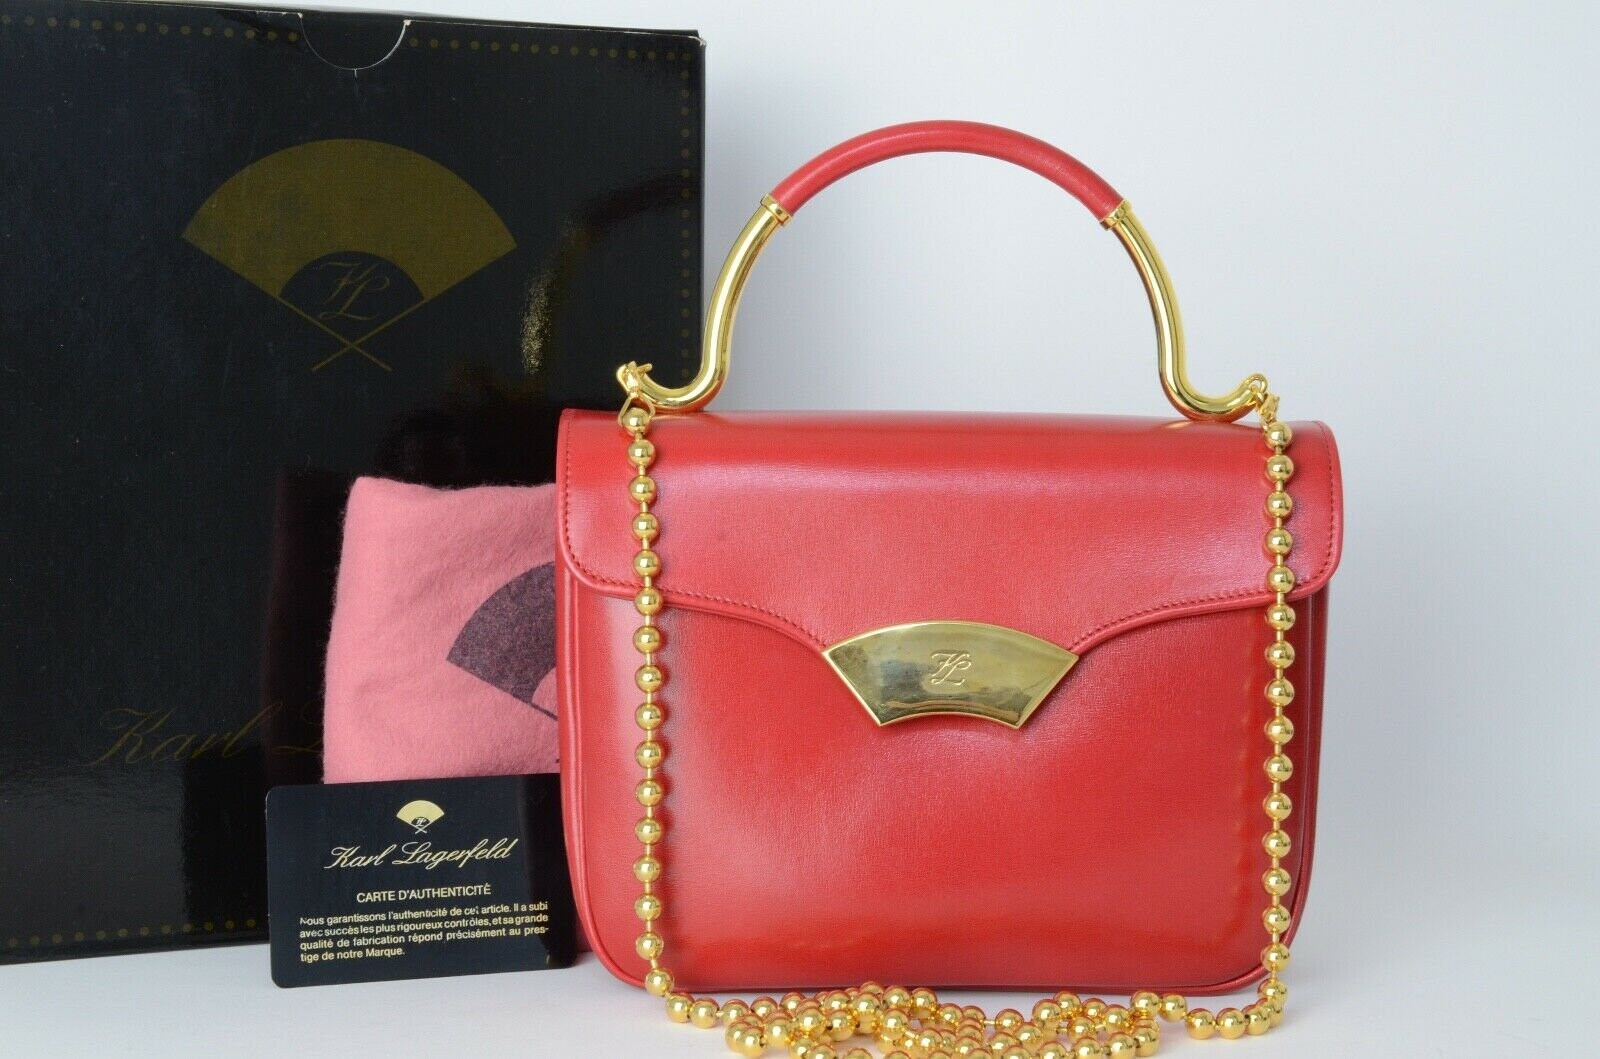 Karl Lagerfeld Authenticated Handbag